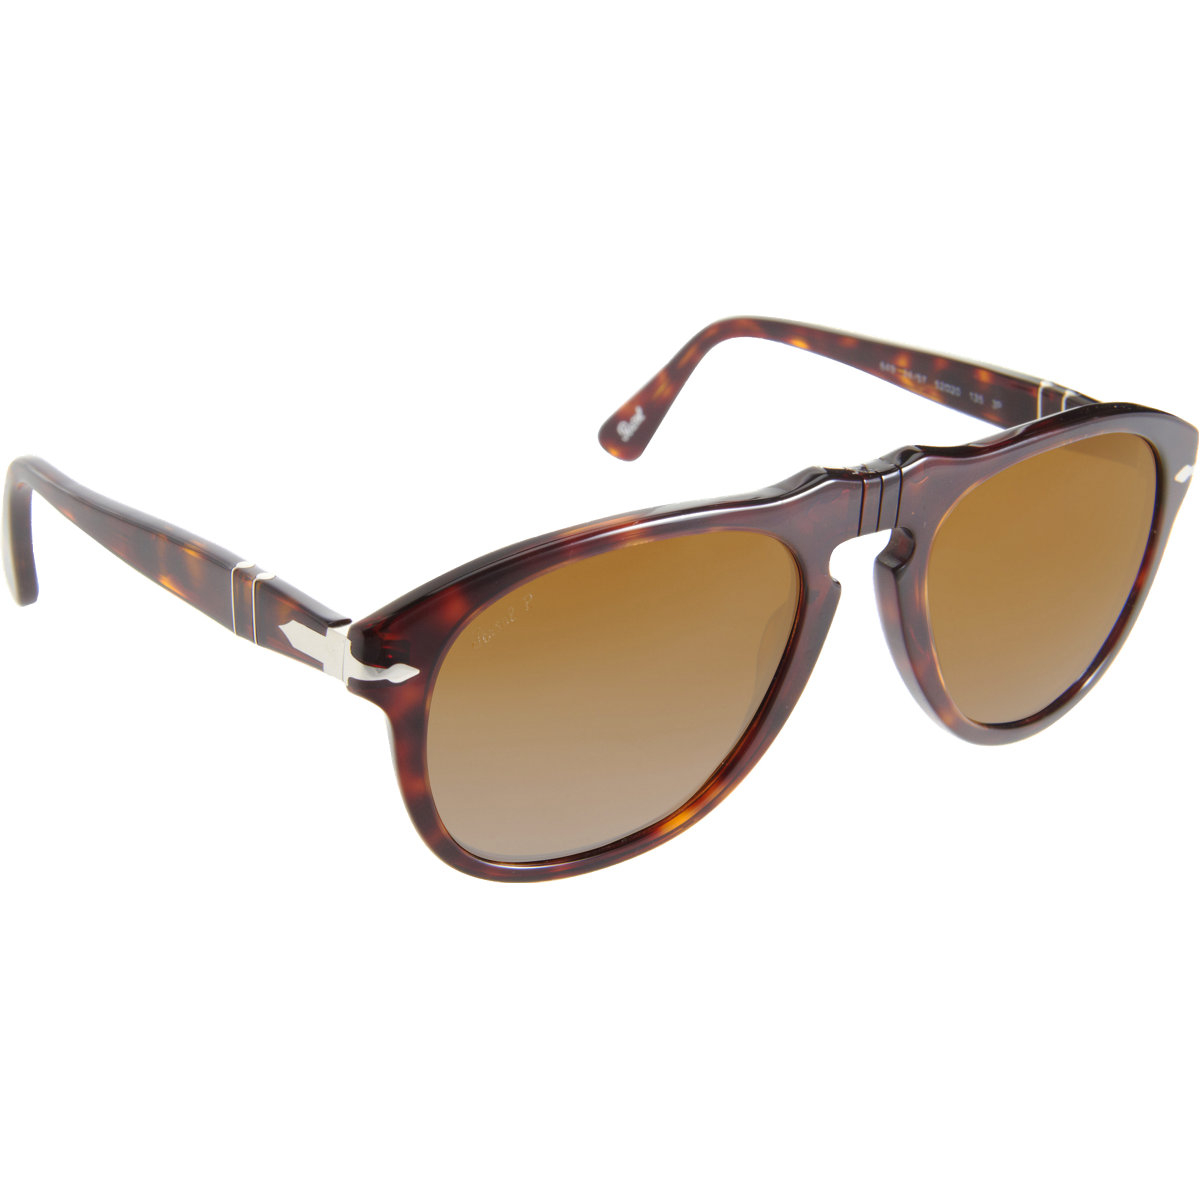 Persol Core Sunglasses in Brown for Men - Lyst